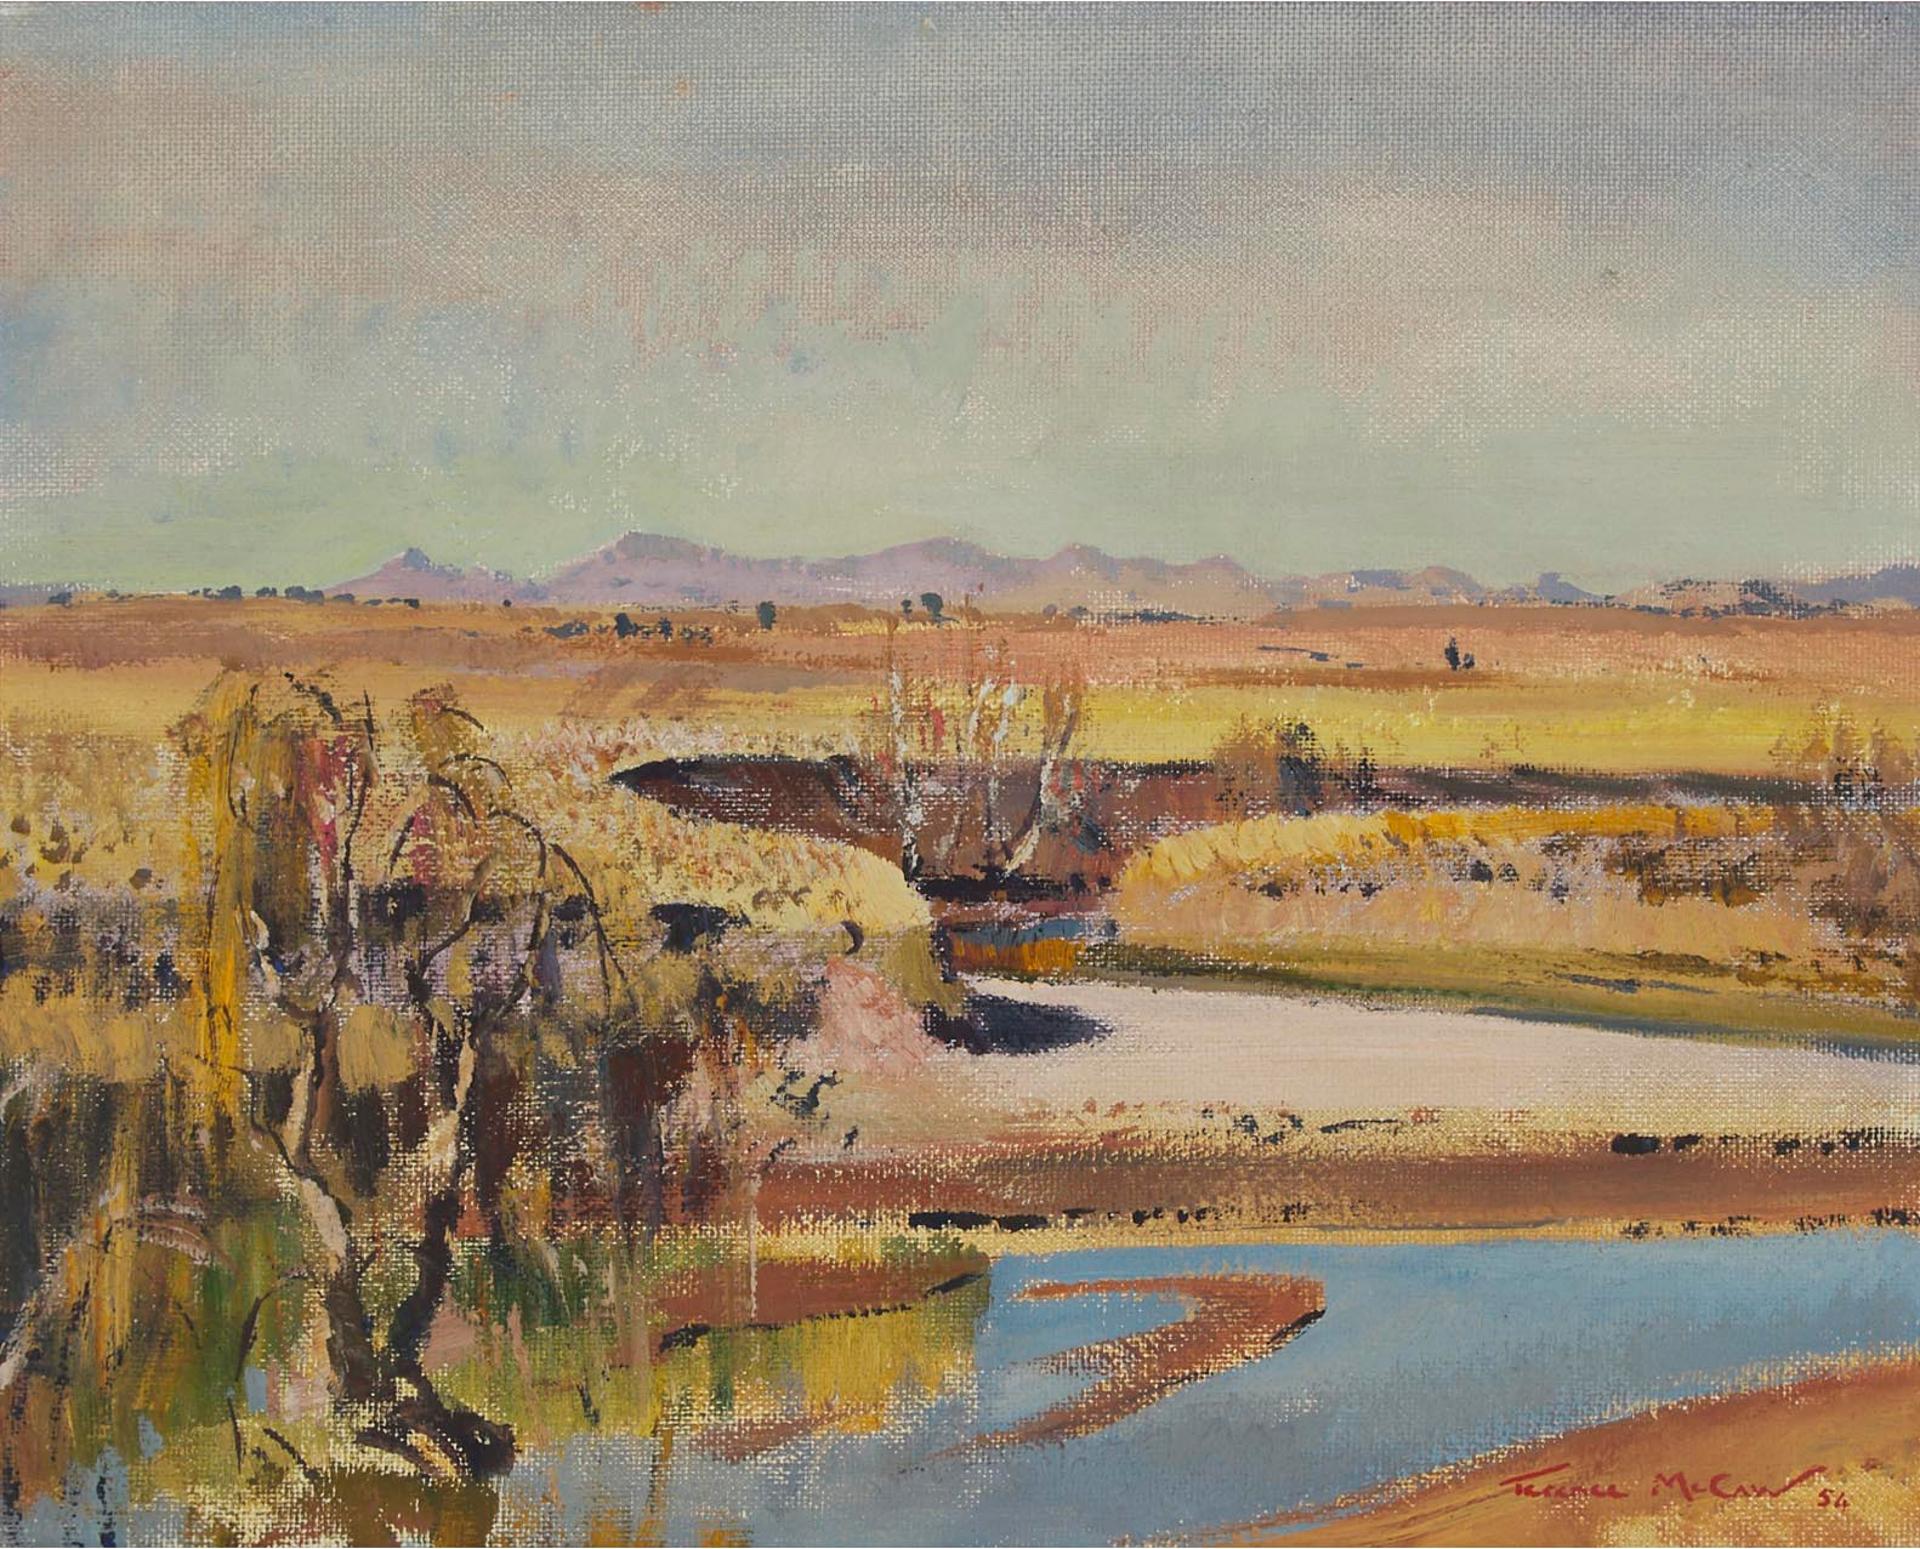 Terrence John McCaw (1913-1978) - Desert Landscape With Hills, 1954